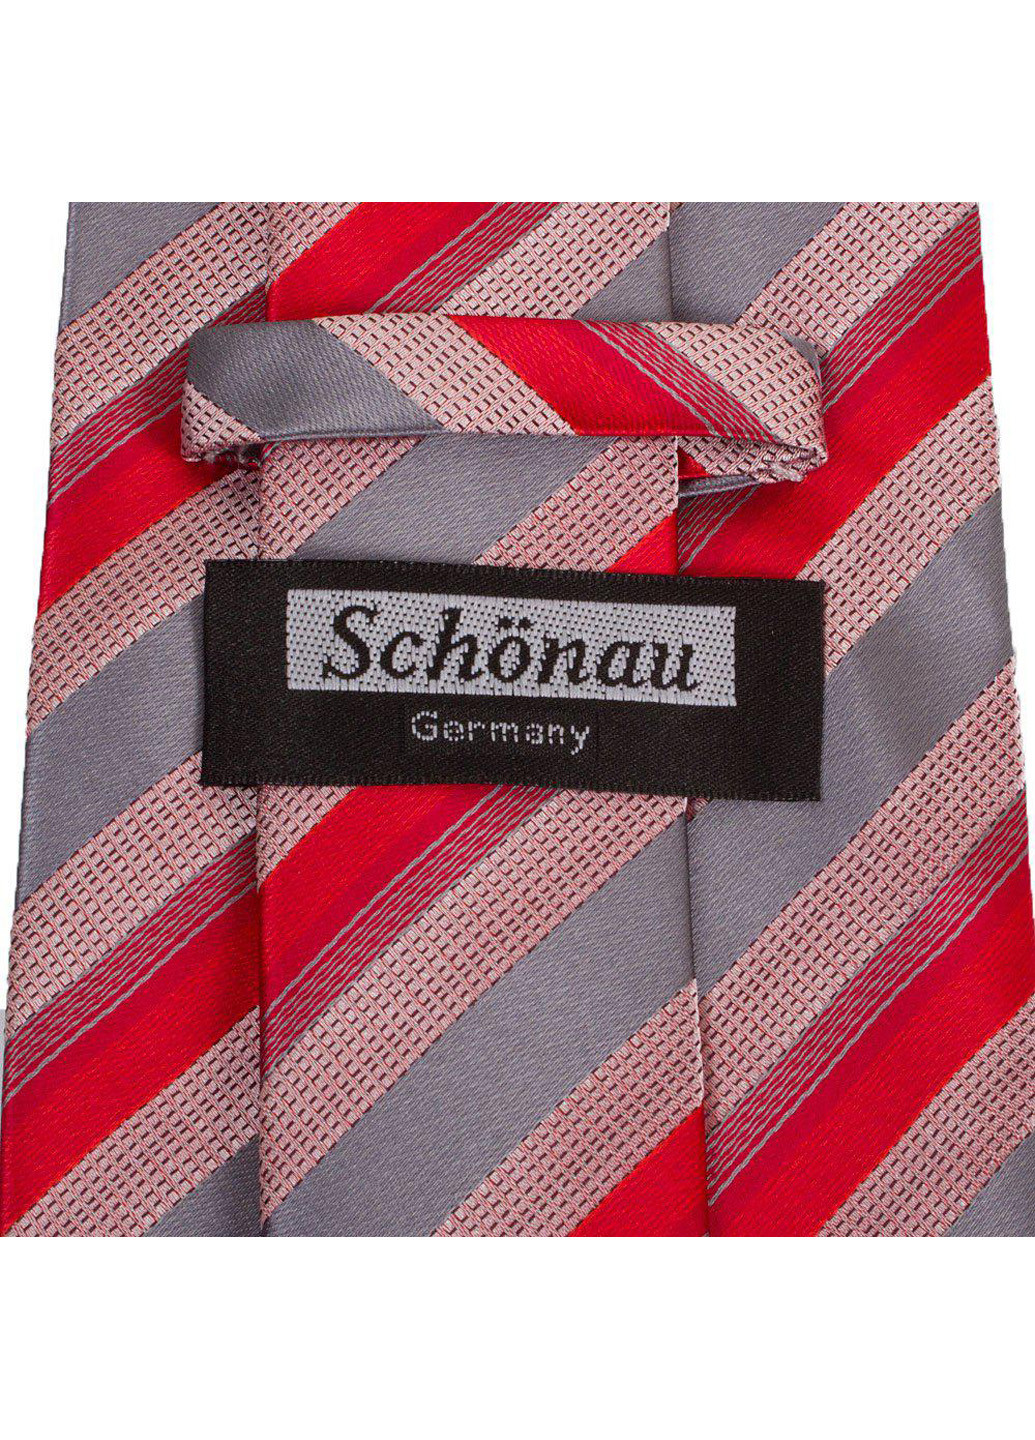 Мужской галстук 148 см Schonau & Houcken (195547589)